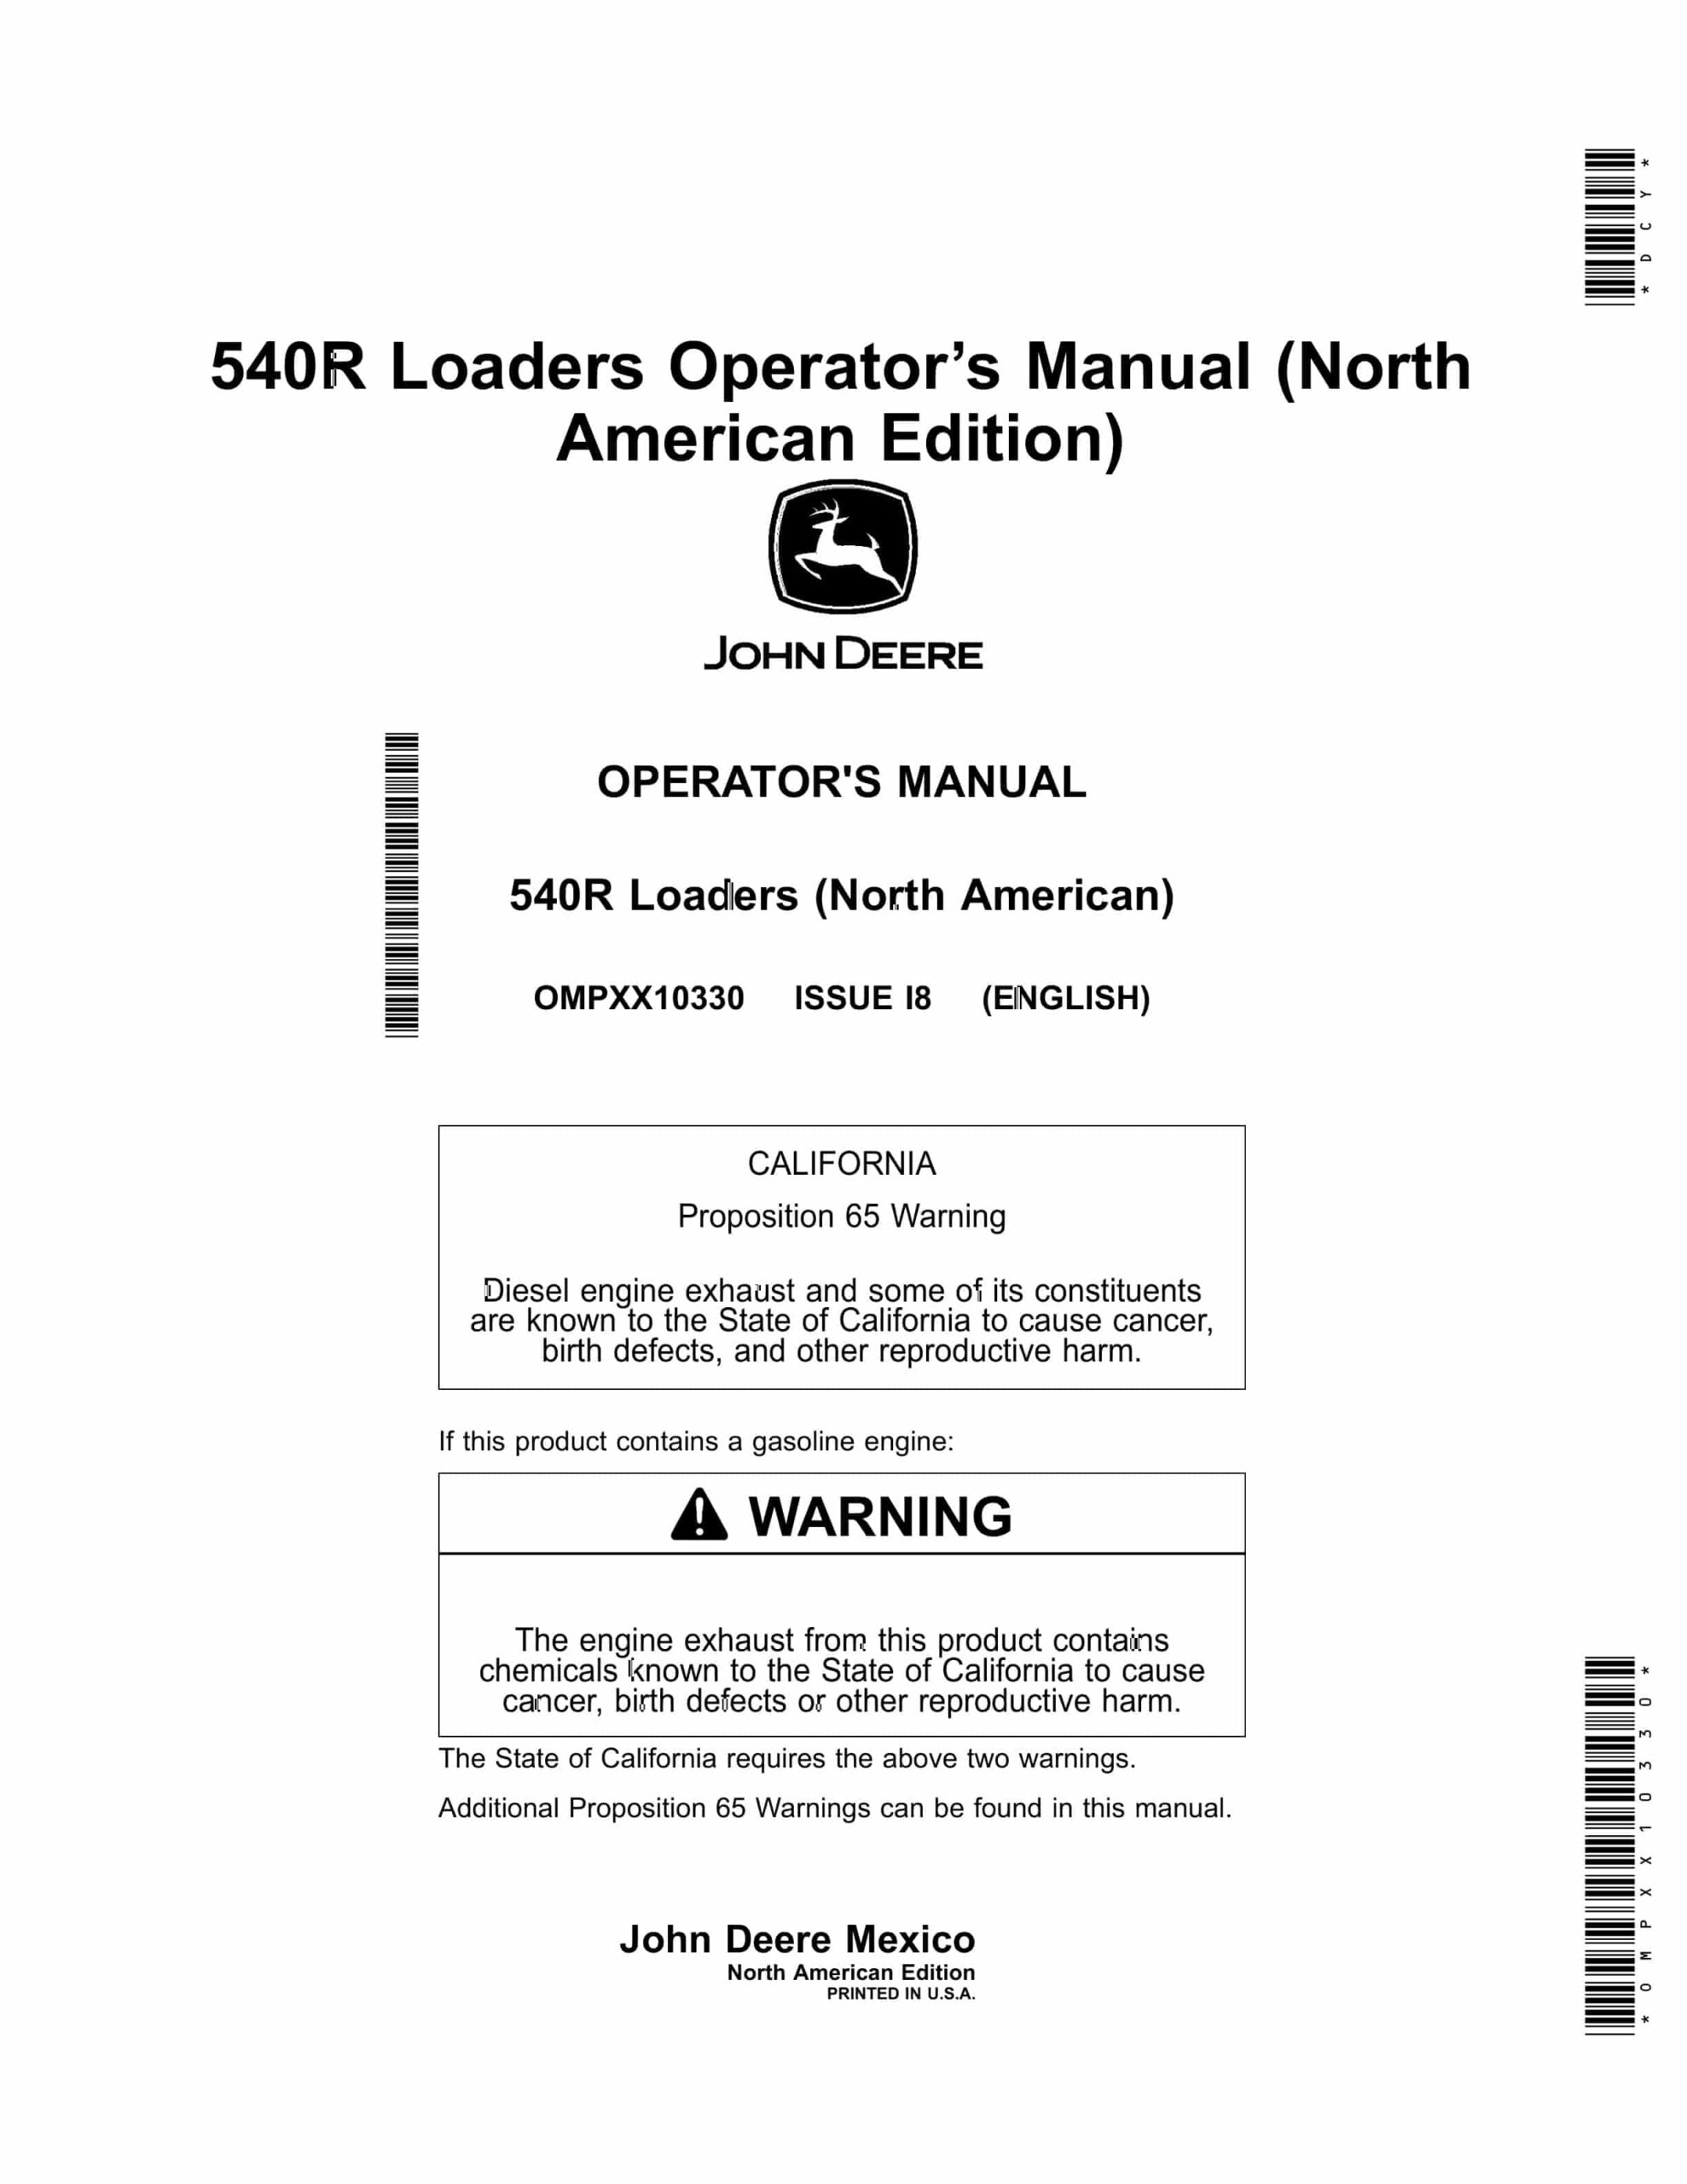 John Deere 540R Loader Operator Manual OMPXX10330-1